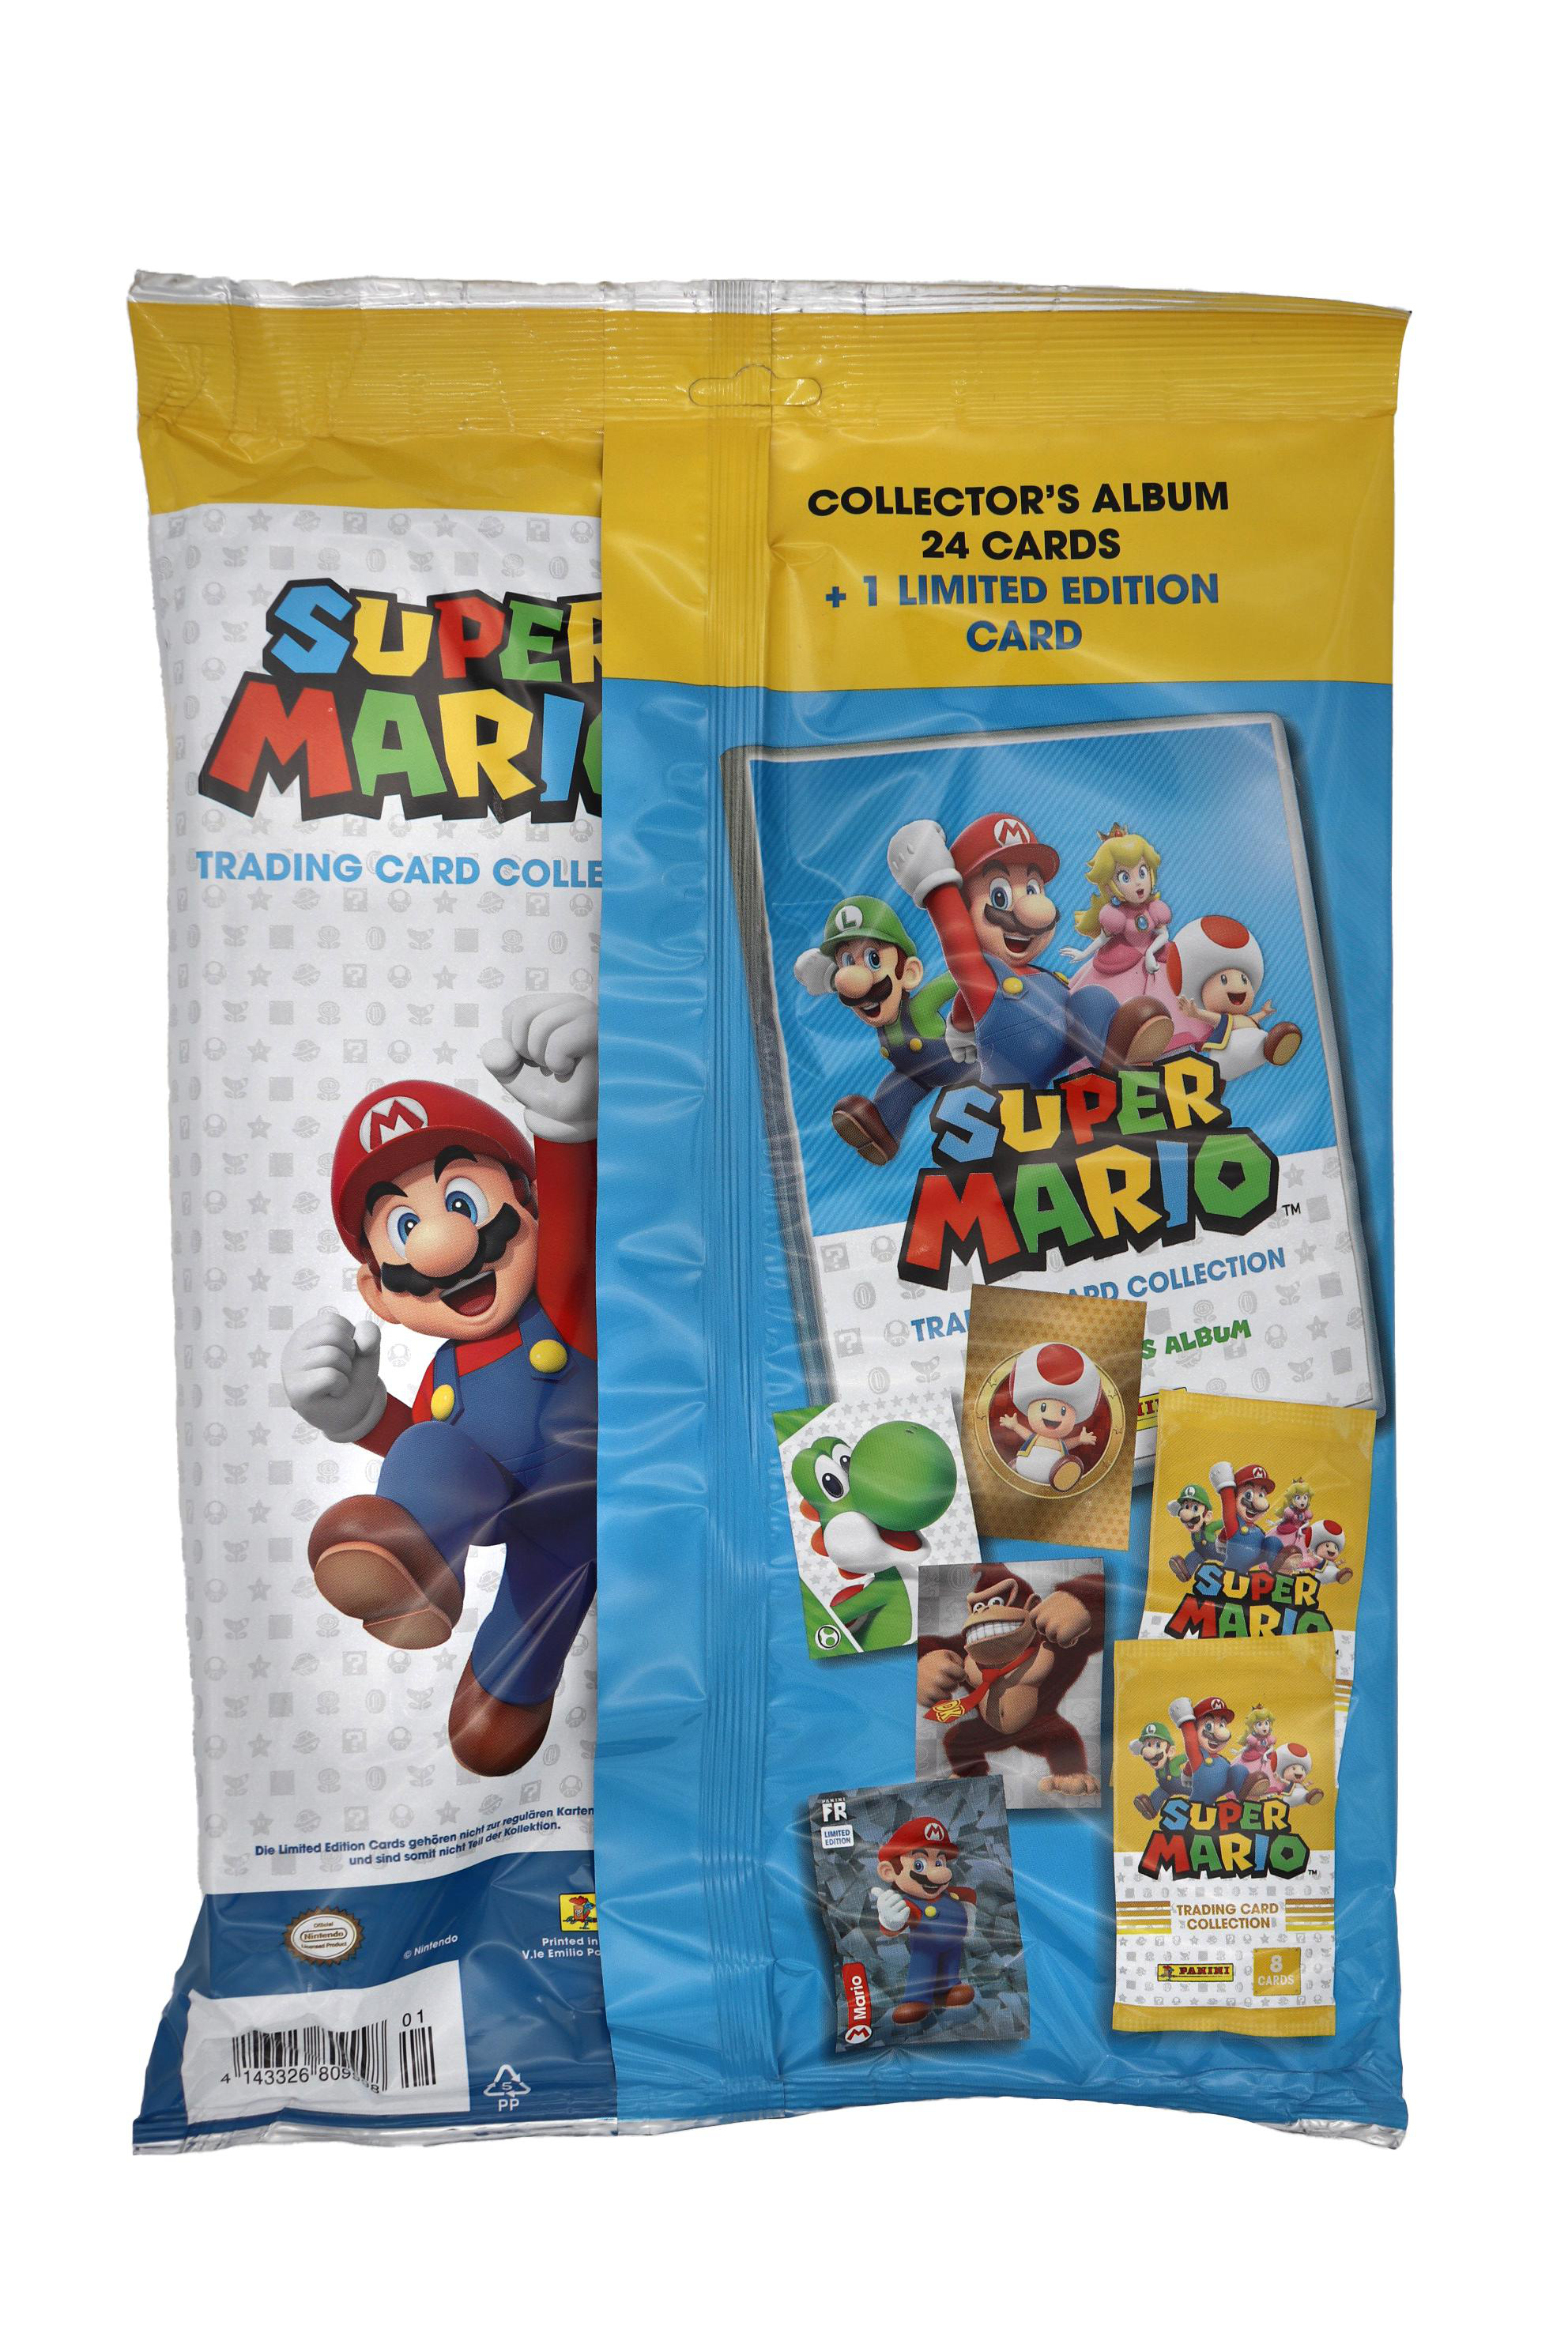 Sammelkarten Nintendo PANINI Mario Starter-Set Super